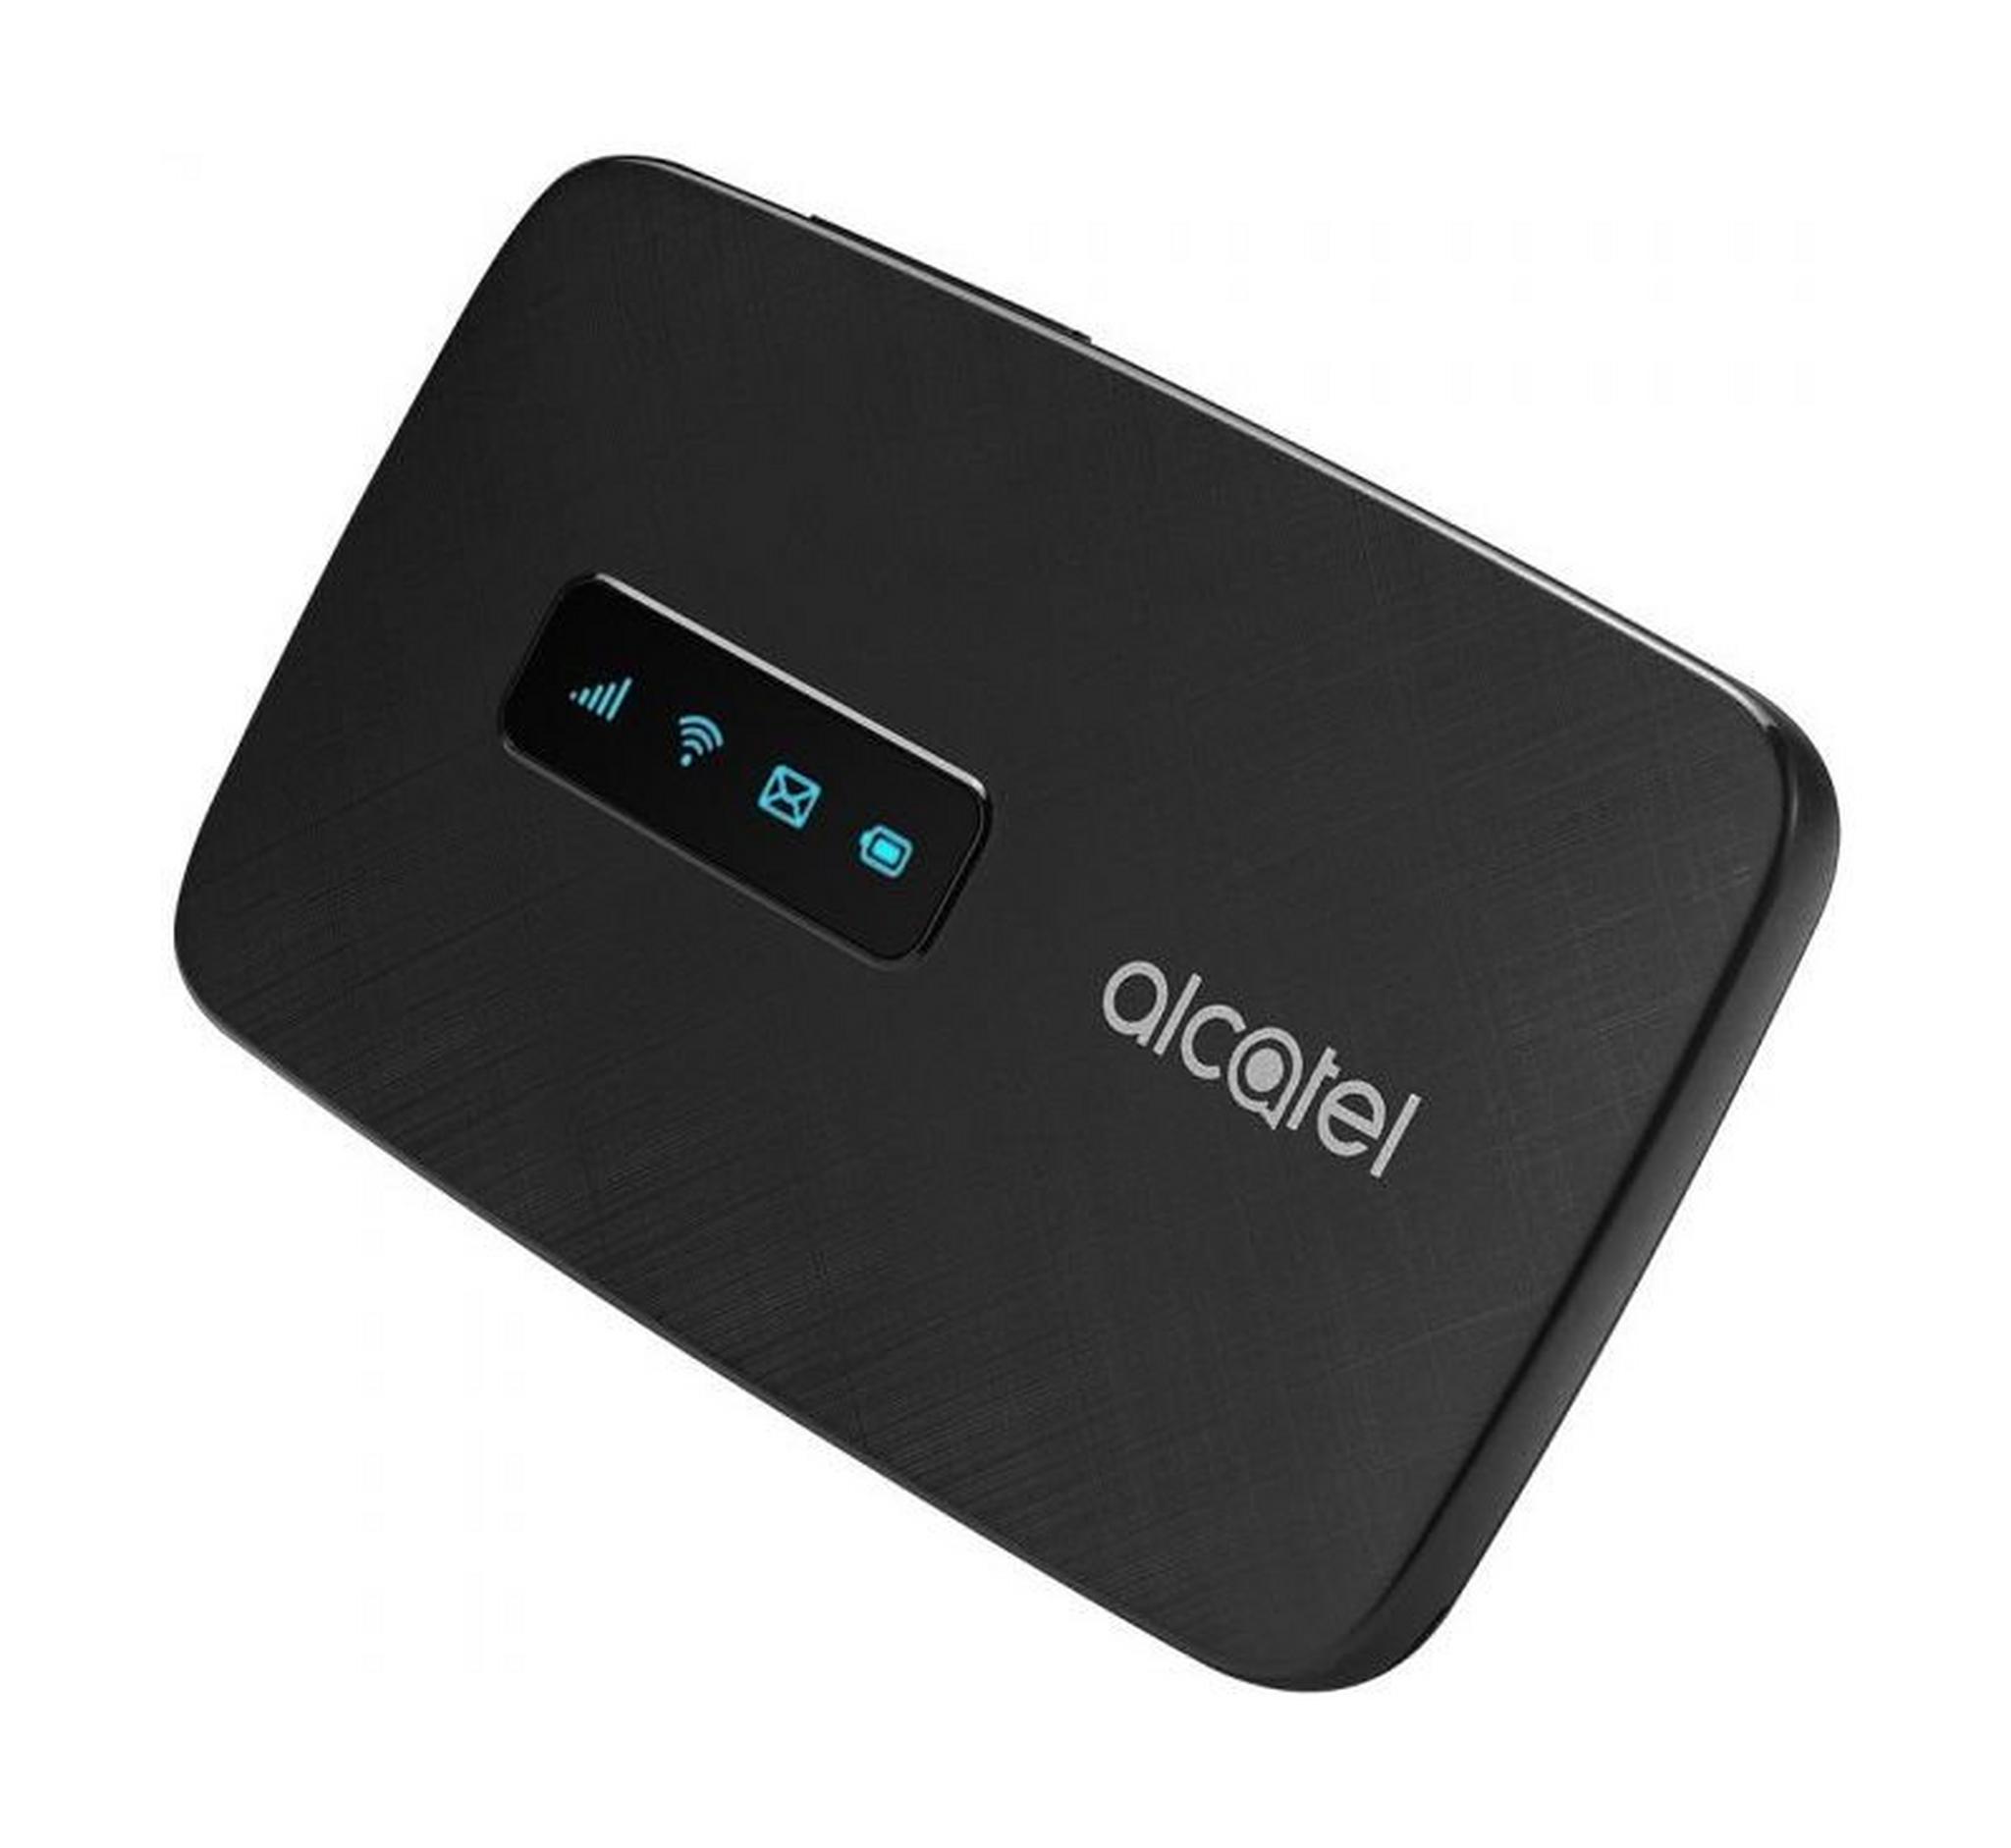 Alcatel LinkZone 4G LTE Wireless Router - Black